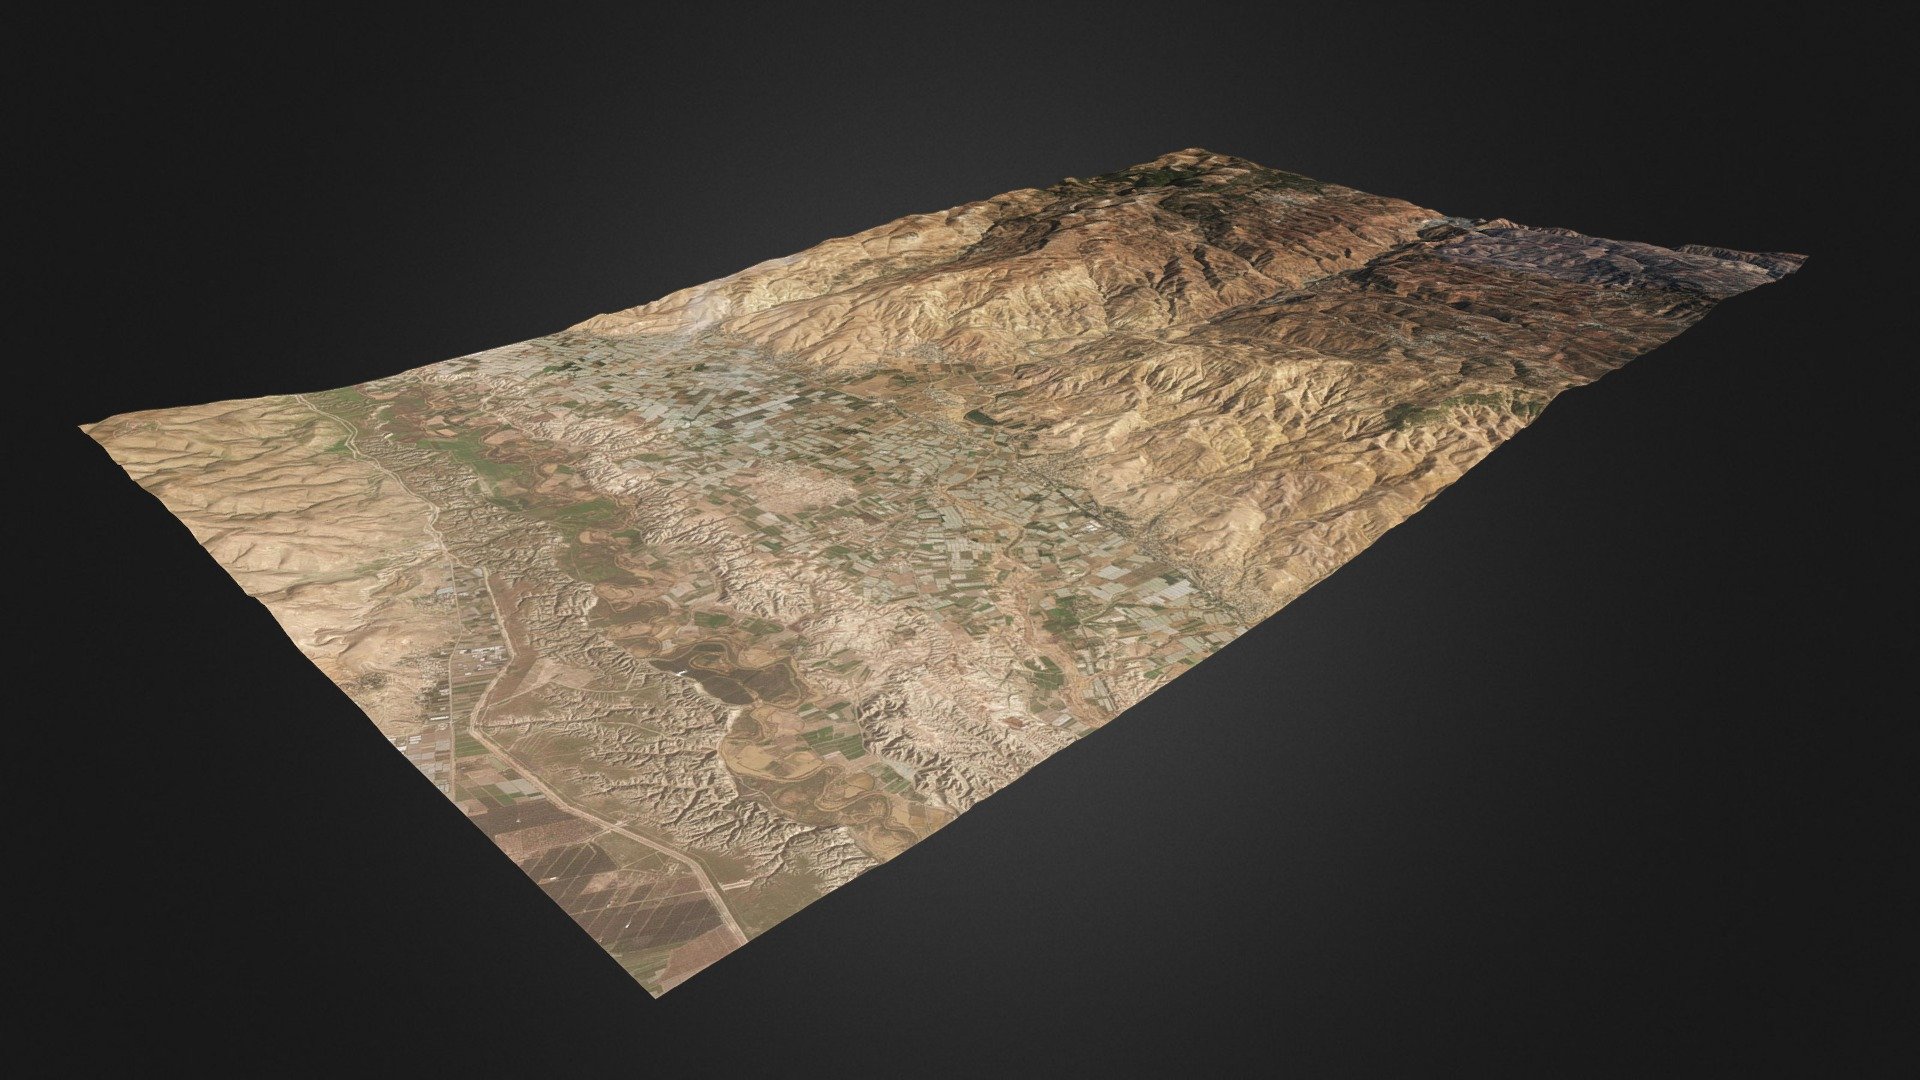 Tulul adh-Dhahab, Zarqa Valley - MapBox imagery